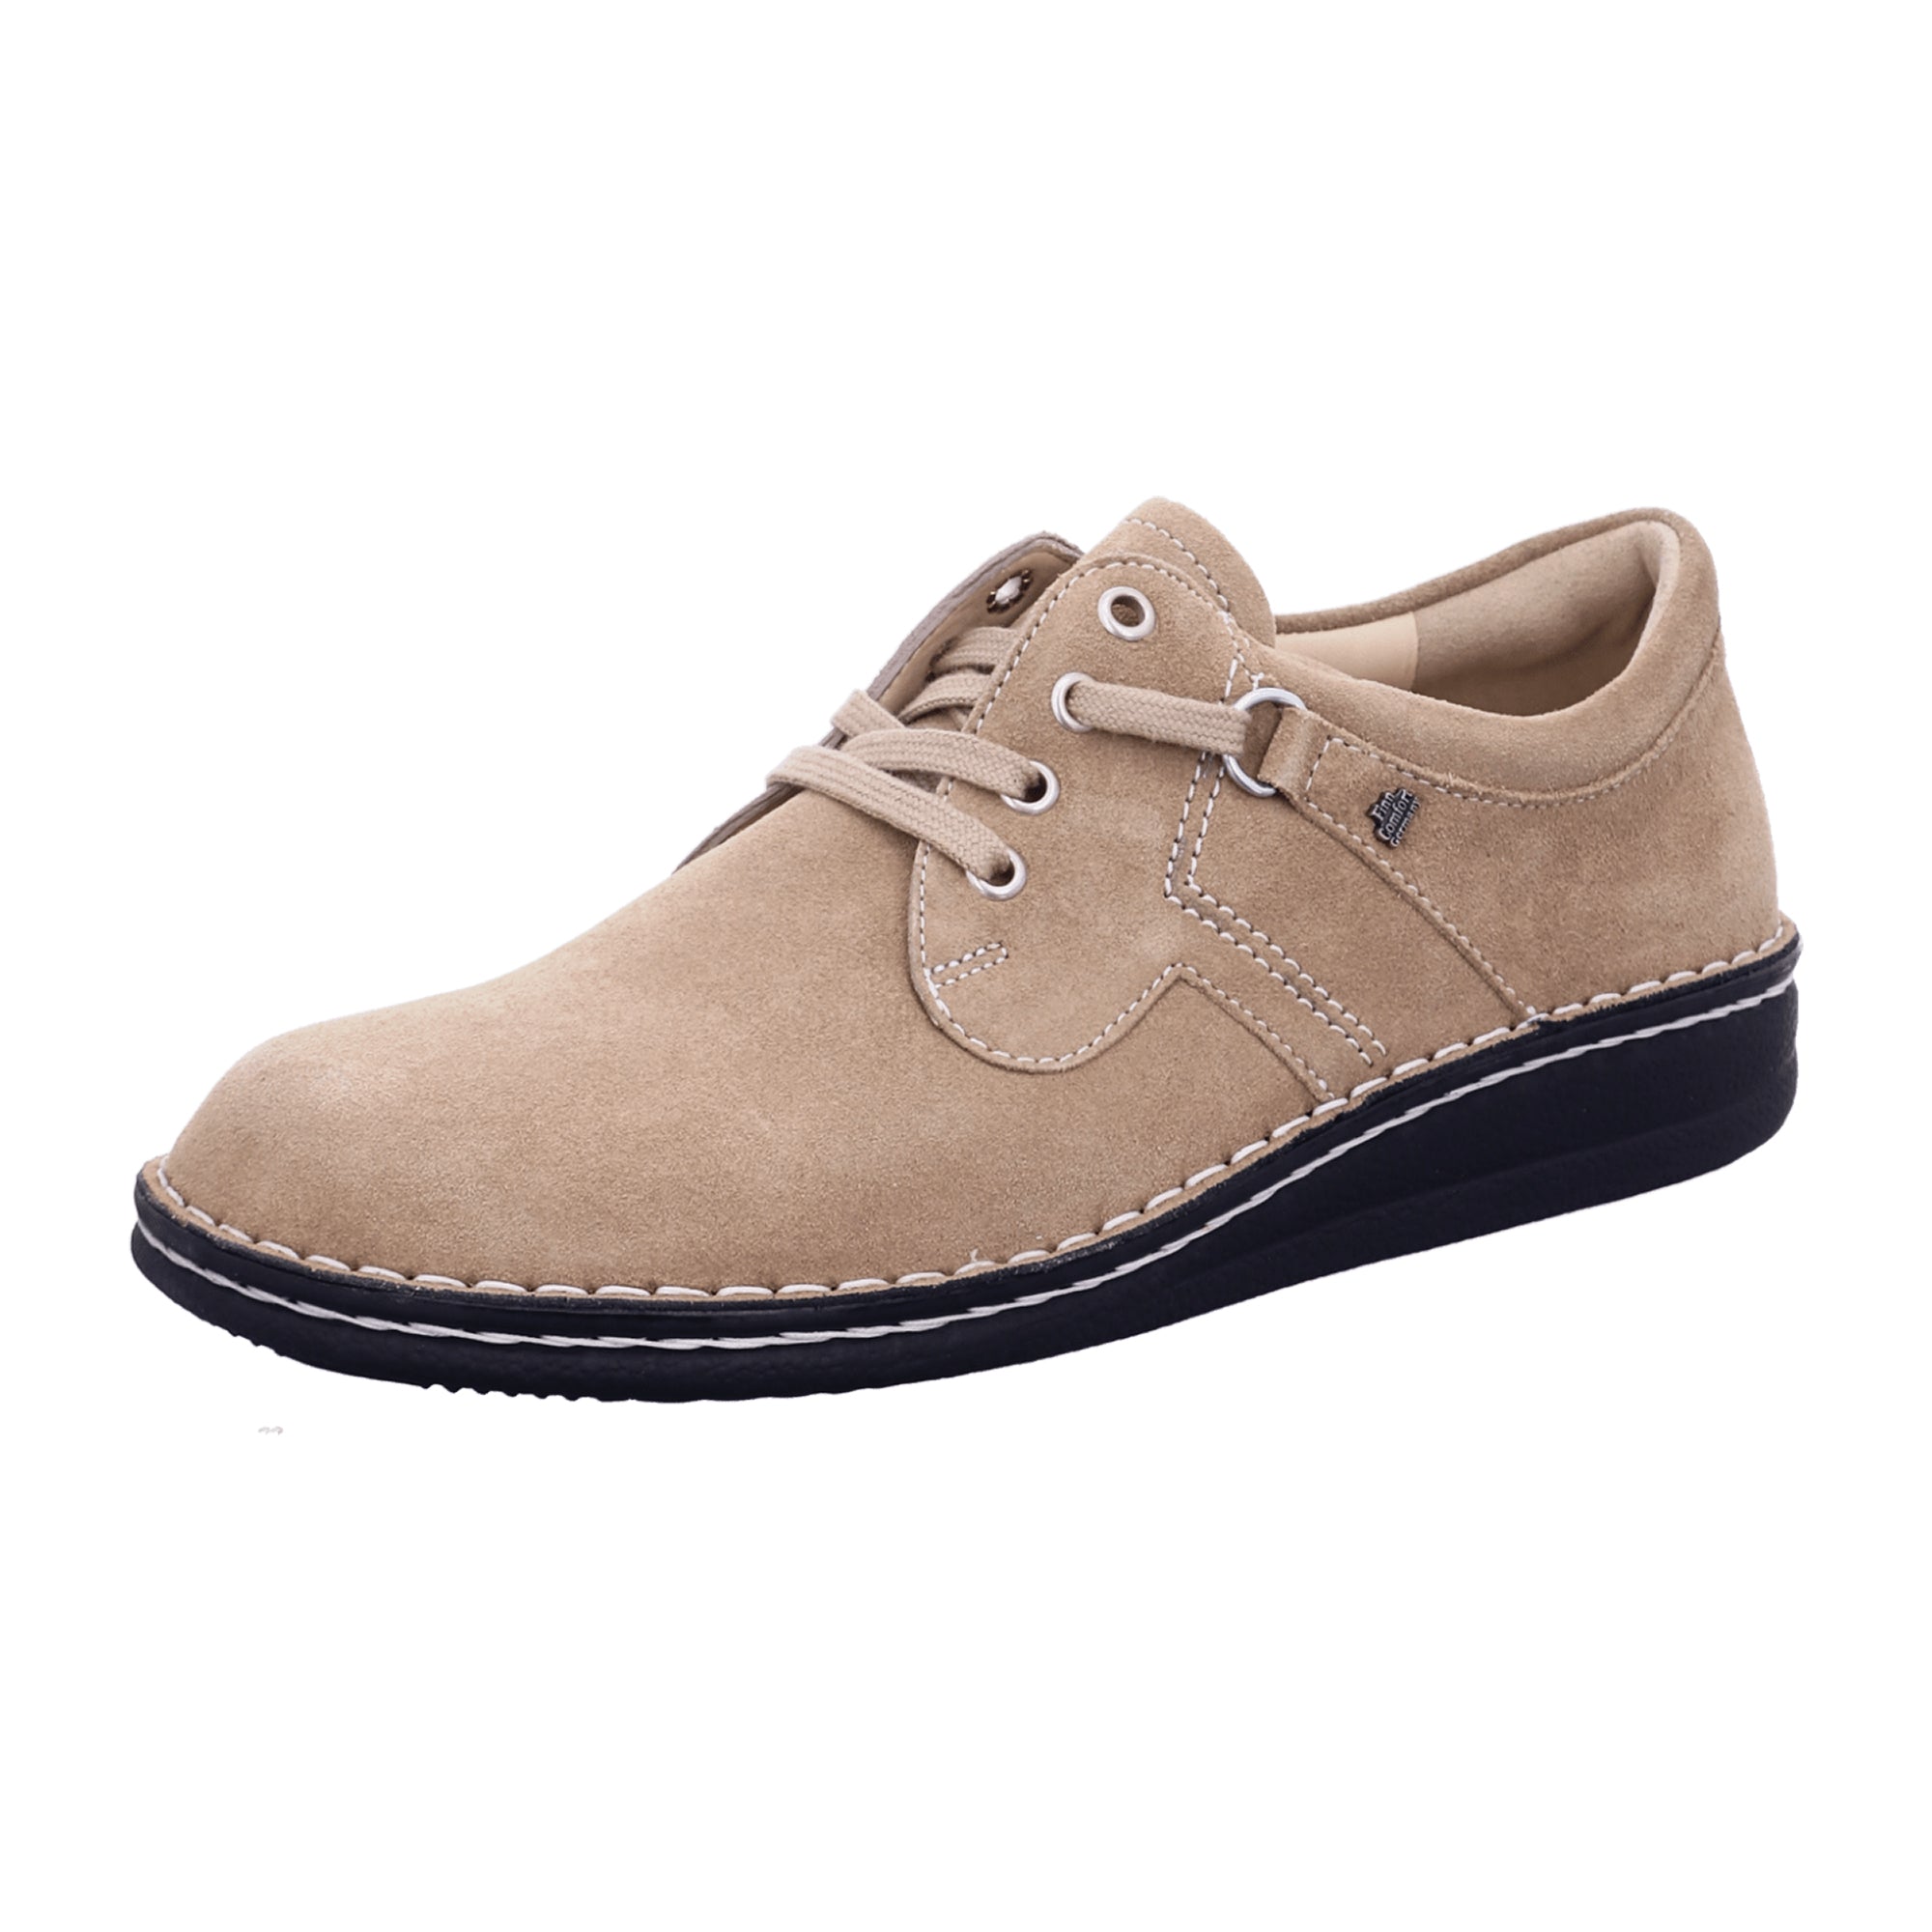 Finn Comfort Men's Orthopedic Shoes Beige 1000-735081 | Stylish & Durable